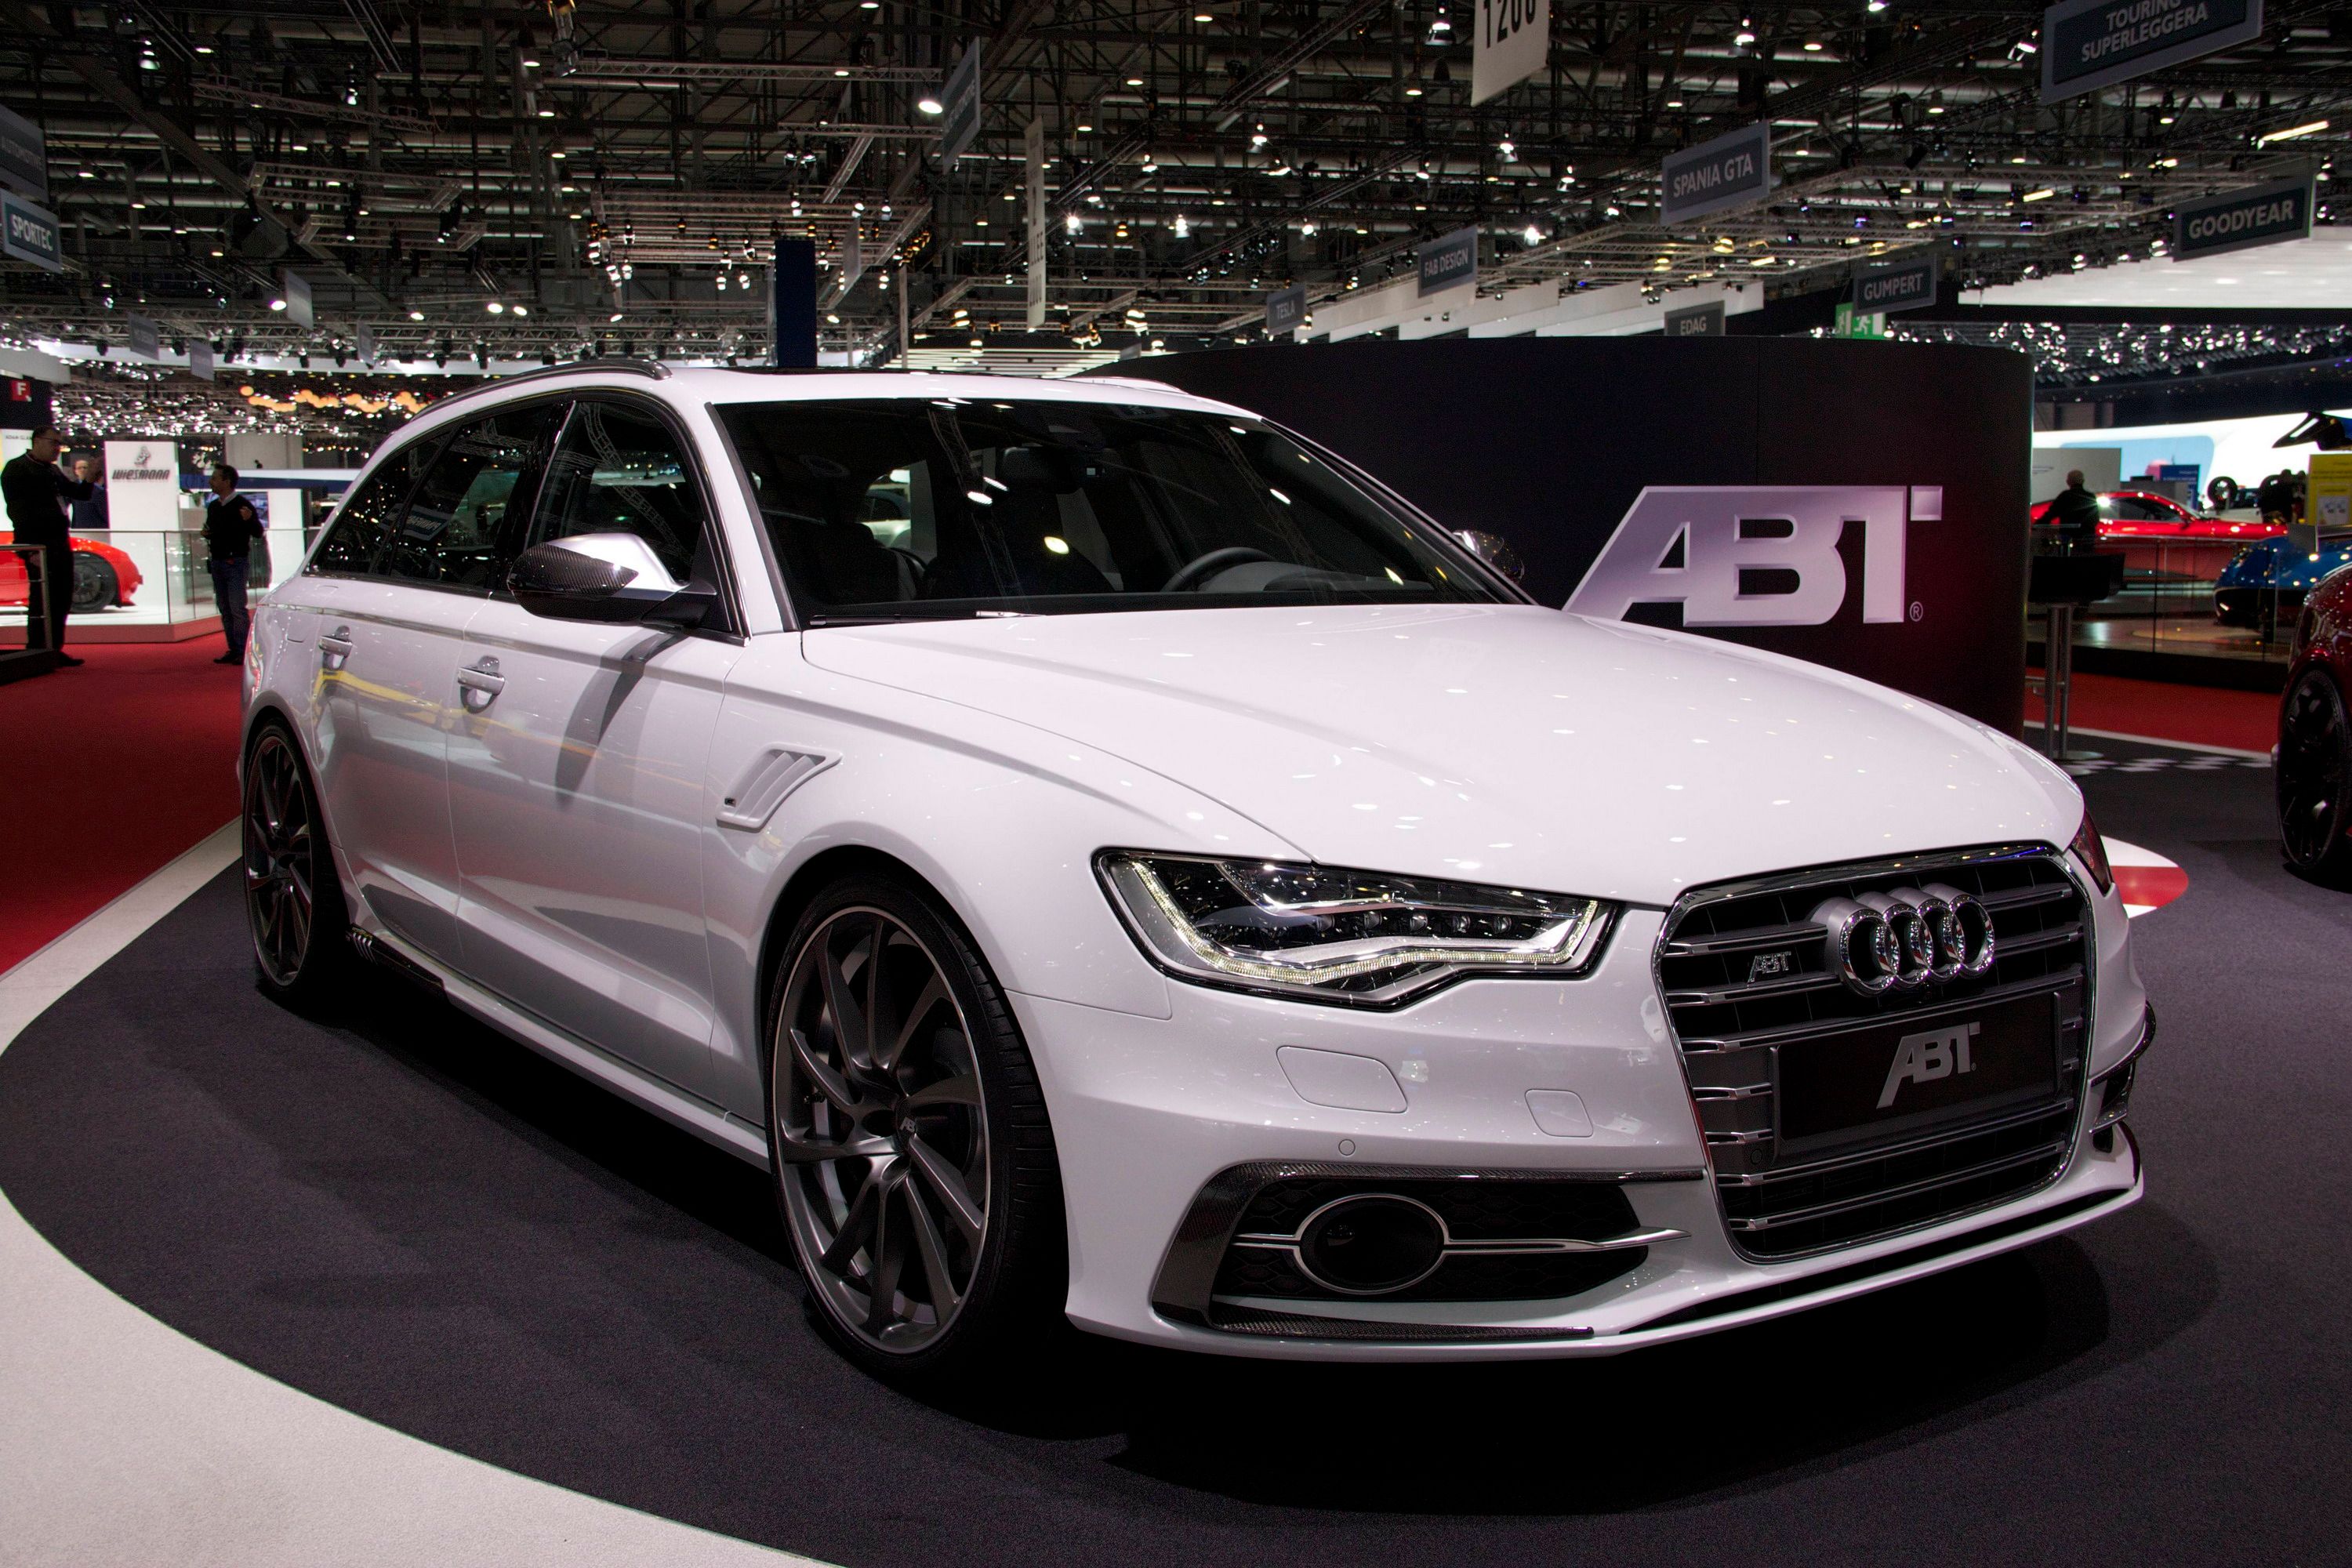 2013 Audi AS6-R by ABT Sportsline